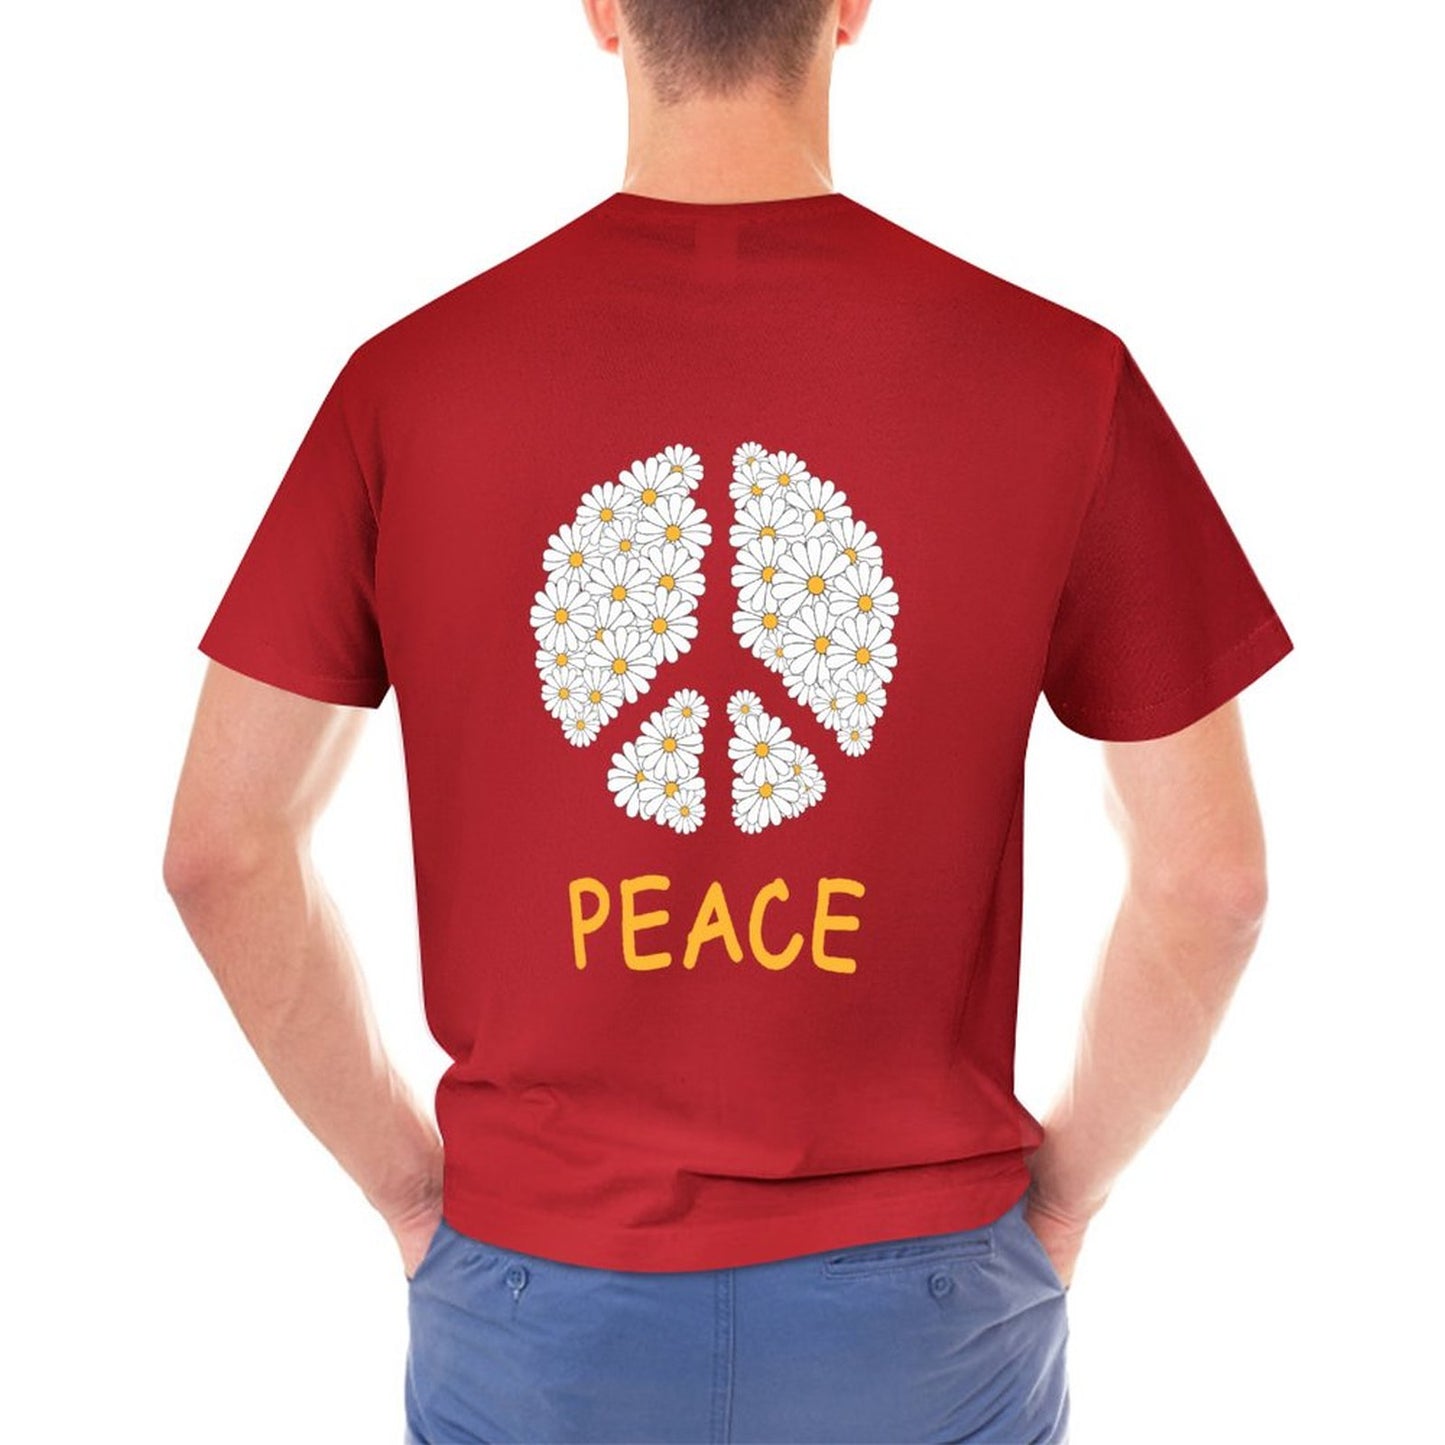 Online Customize T-shirt for Men Gildan T-shirt for Men Peace Against War White Daisies